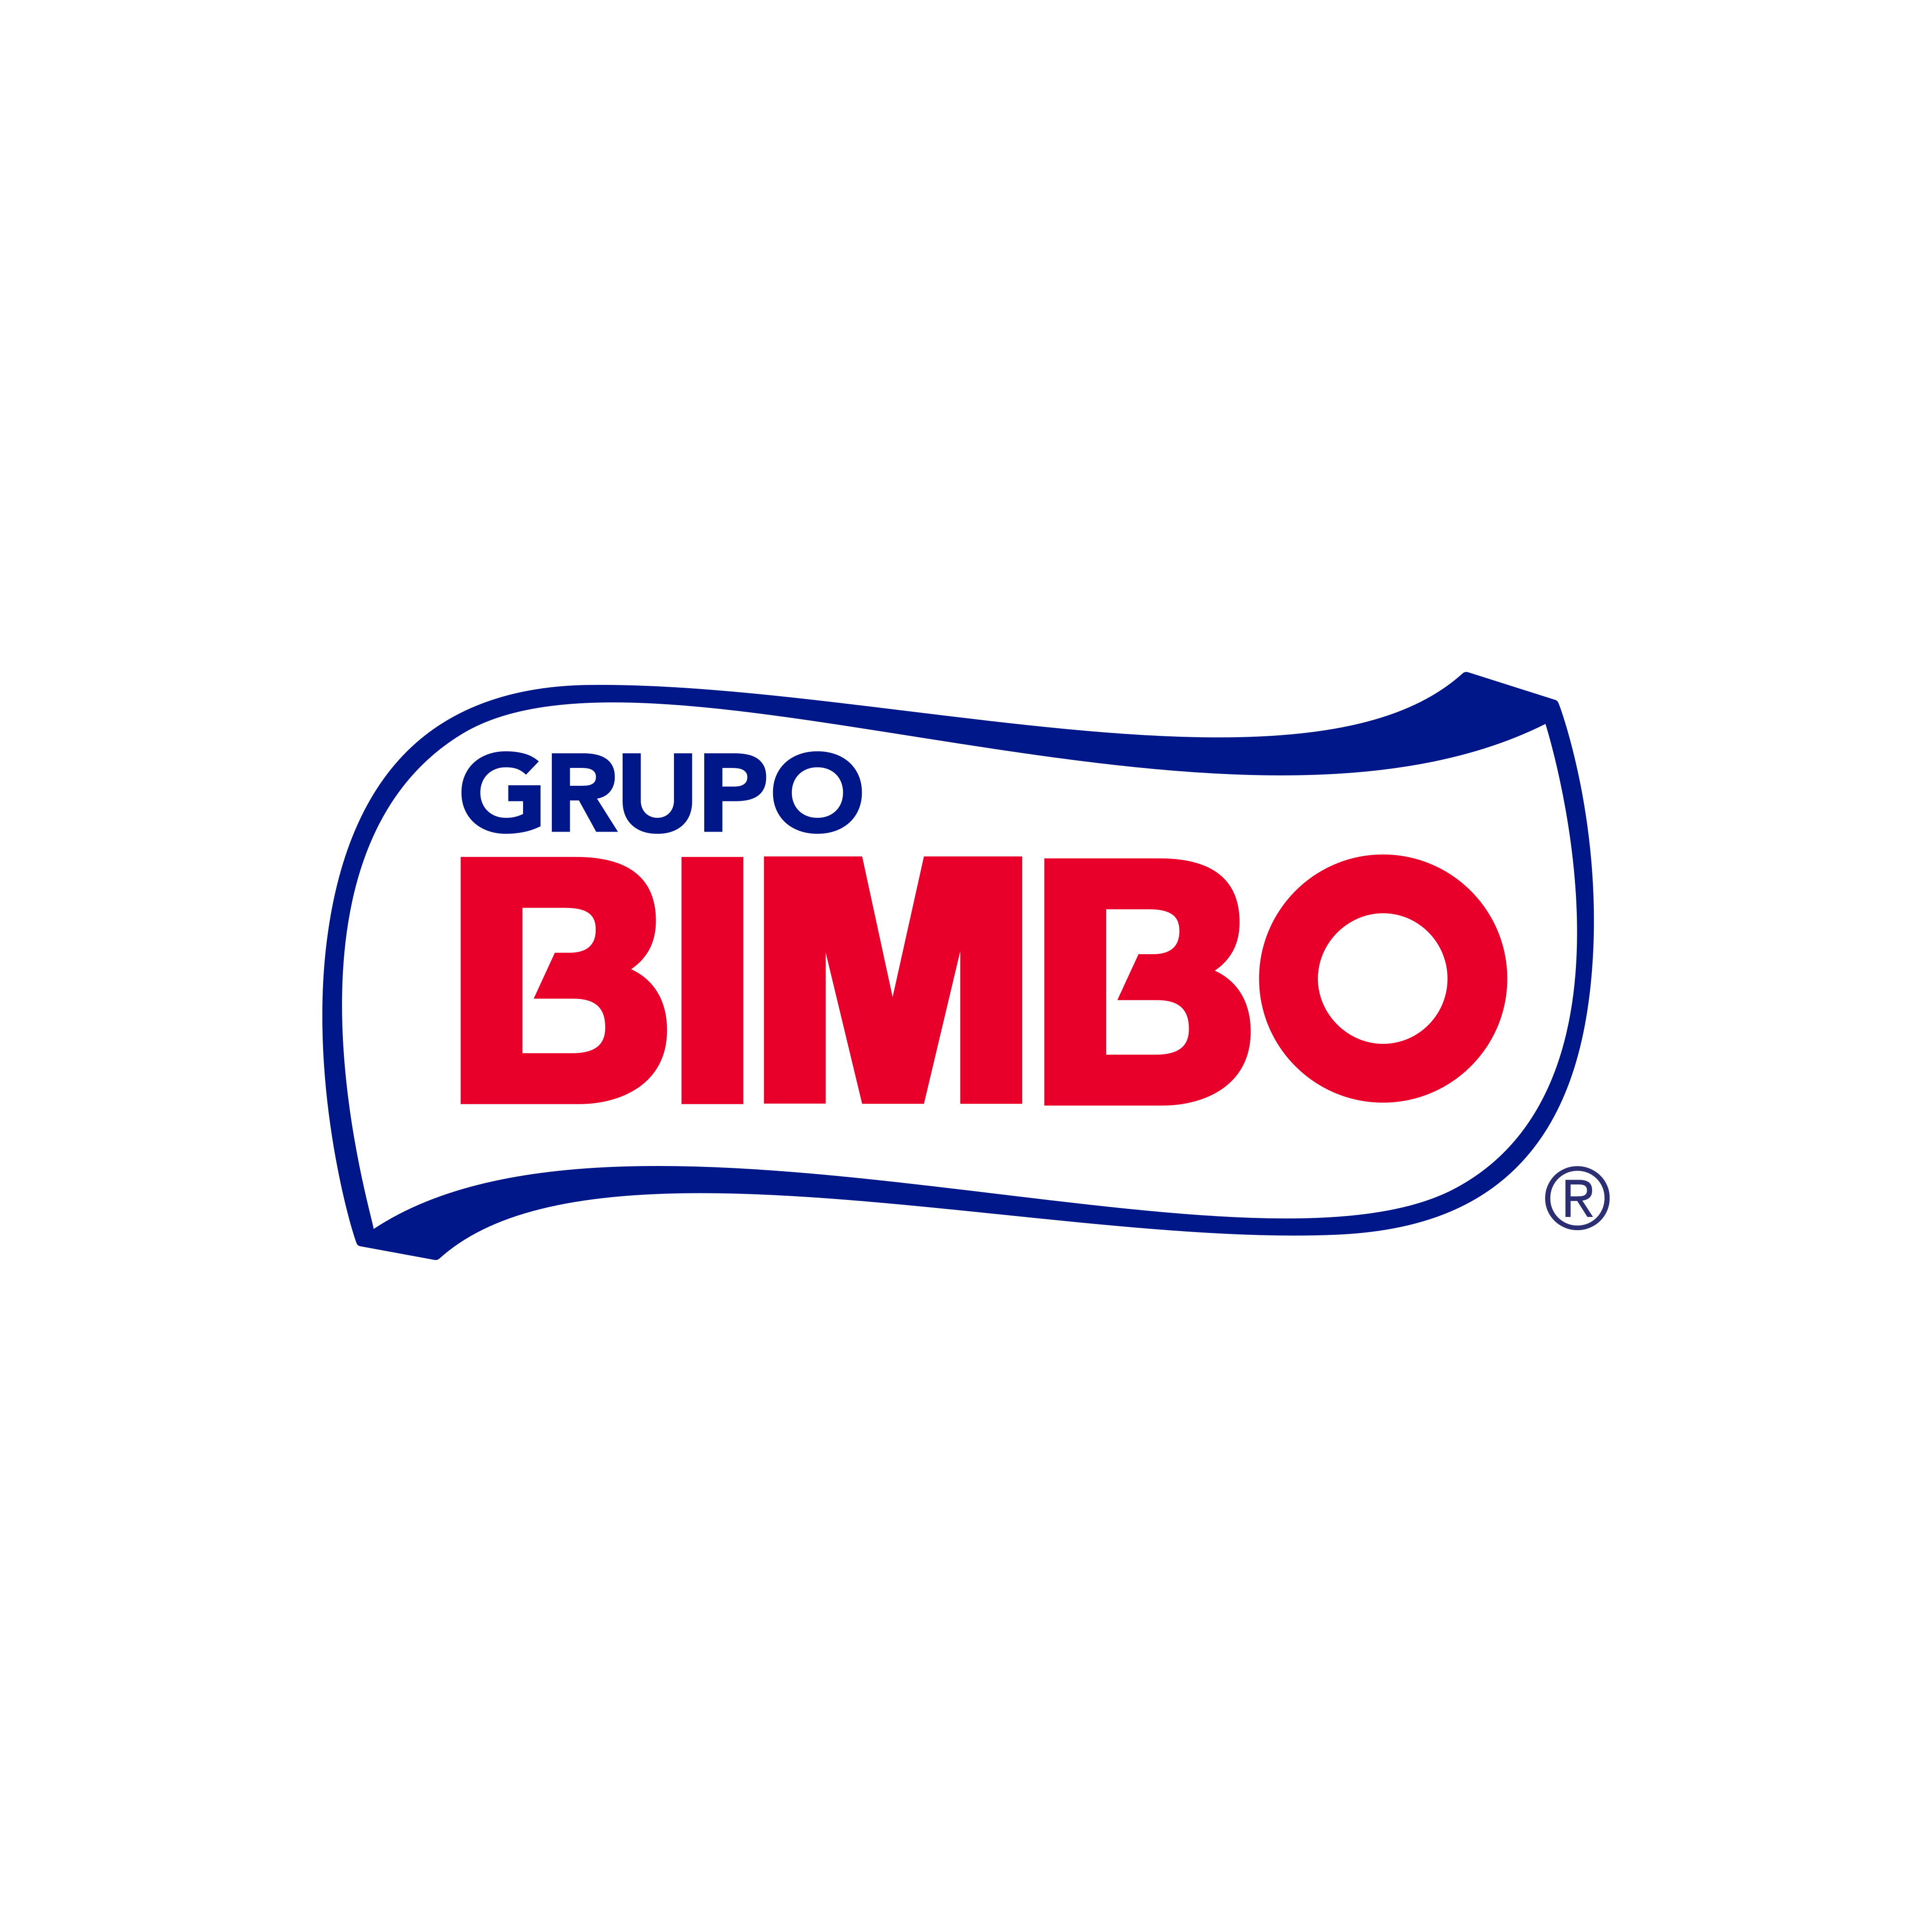 grupo bimbo logo 0 - Grupo Bimbo Logo